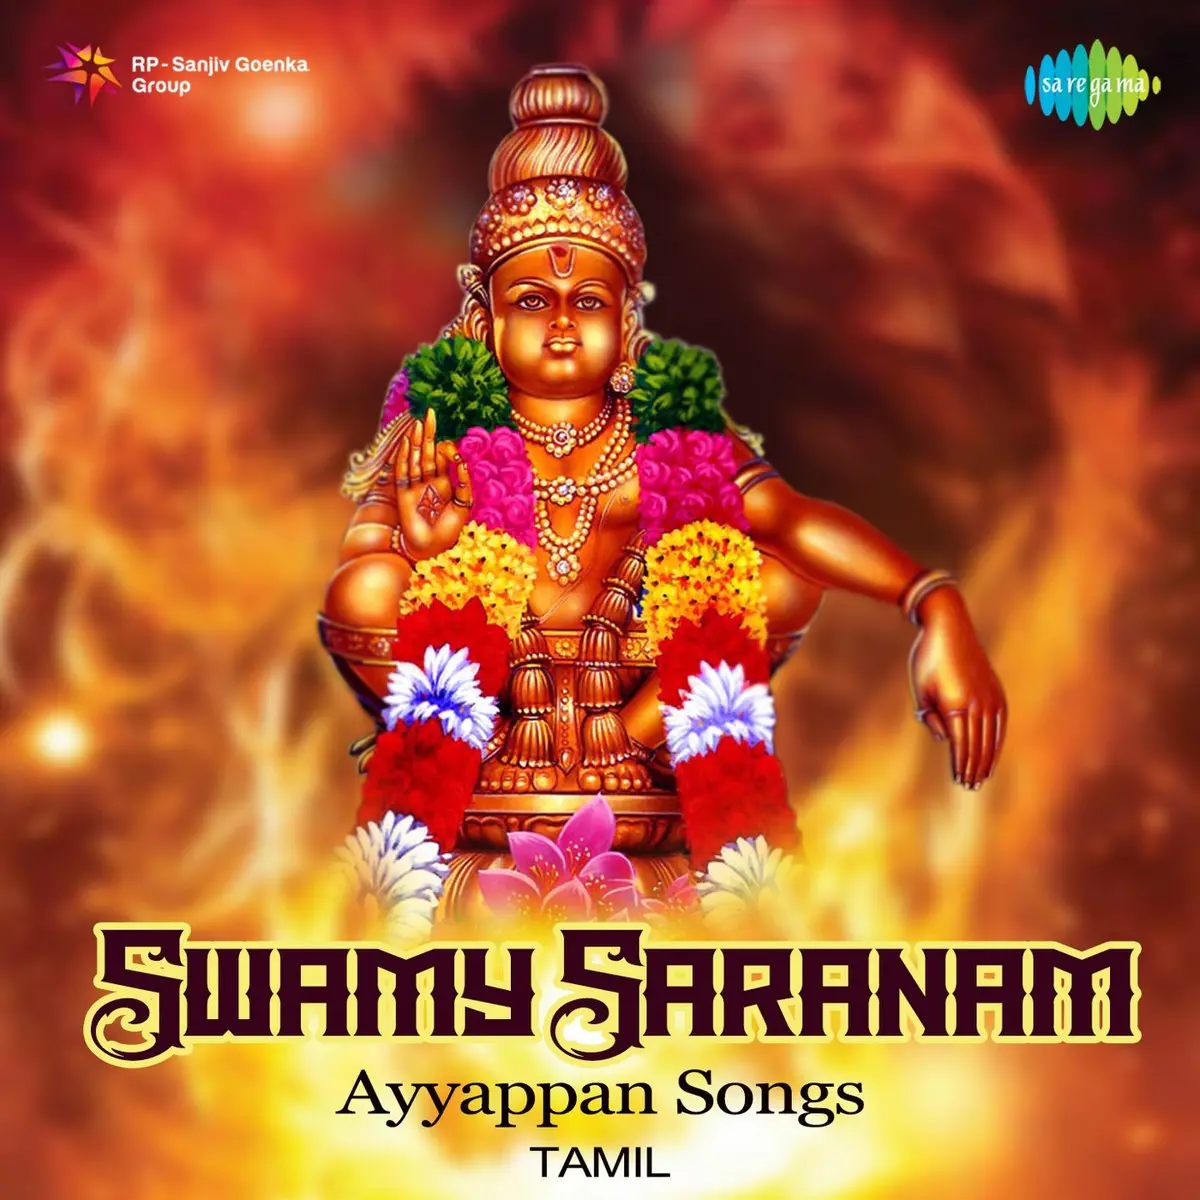 Swamy Saranam Ayyappan Devotional Songs Tamil Songs Download Swamy Saranam Ayyappan Devotional Songs Tamil Mp3 Tamil Songs Online Free On Gaana Com